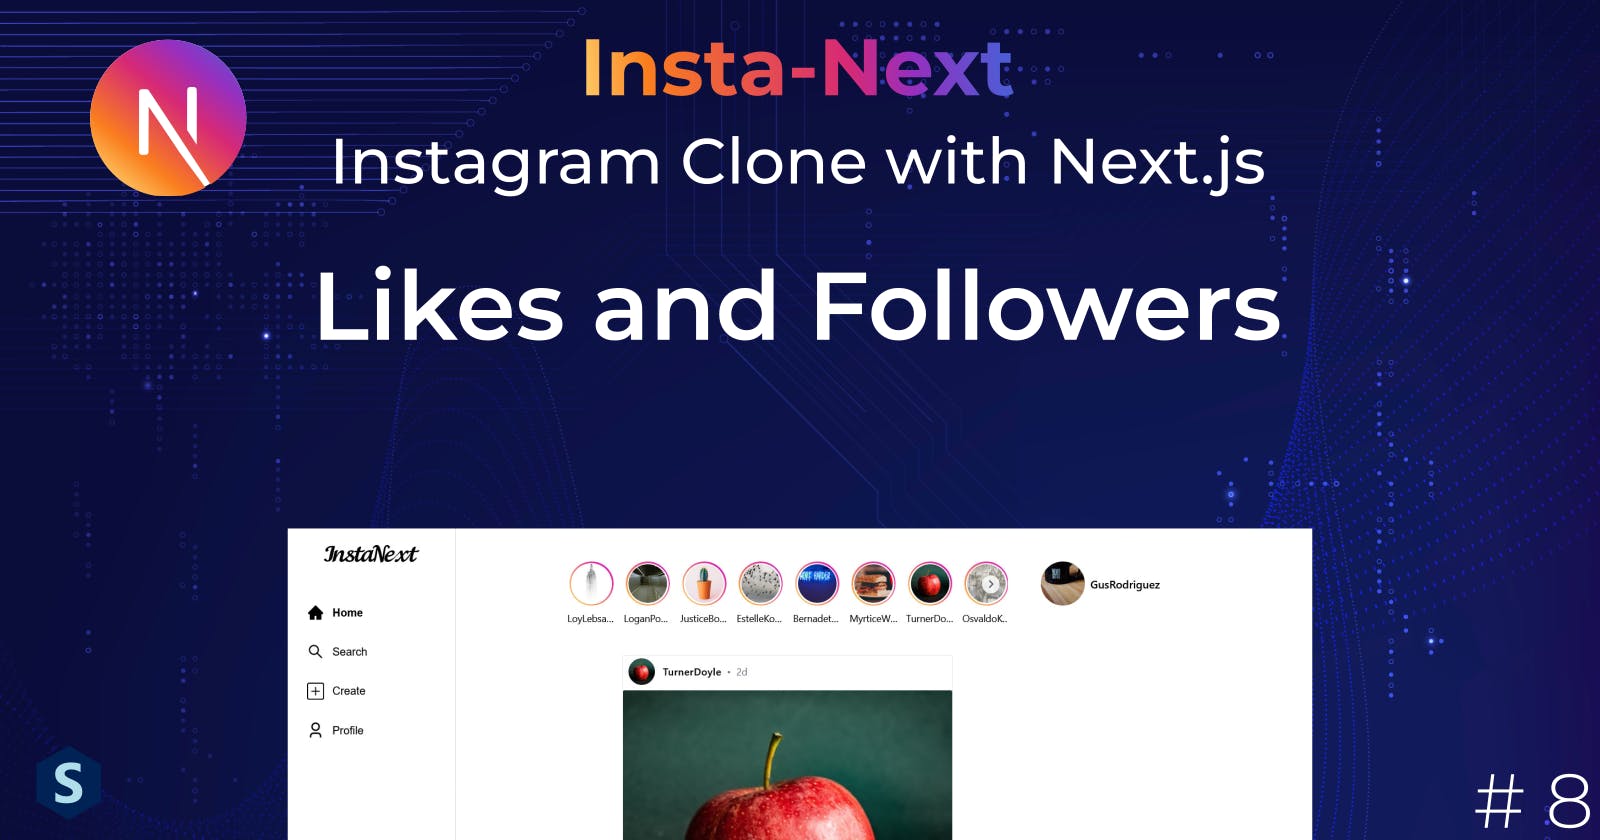 Insta-Next: Likes and Followers